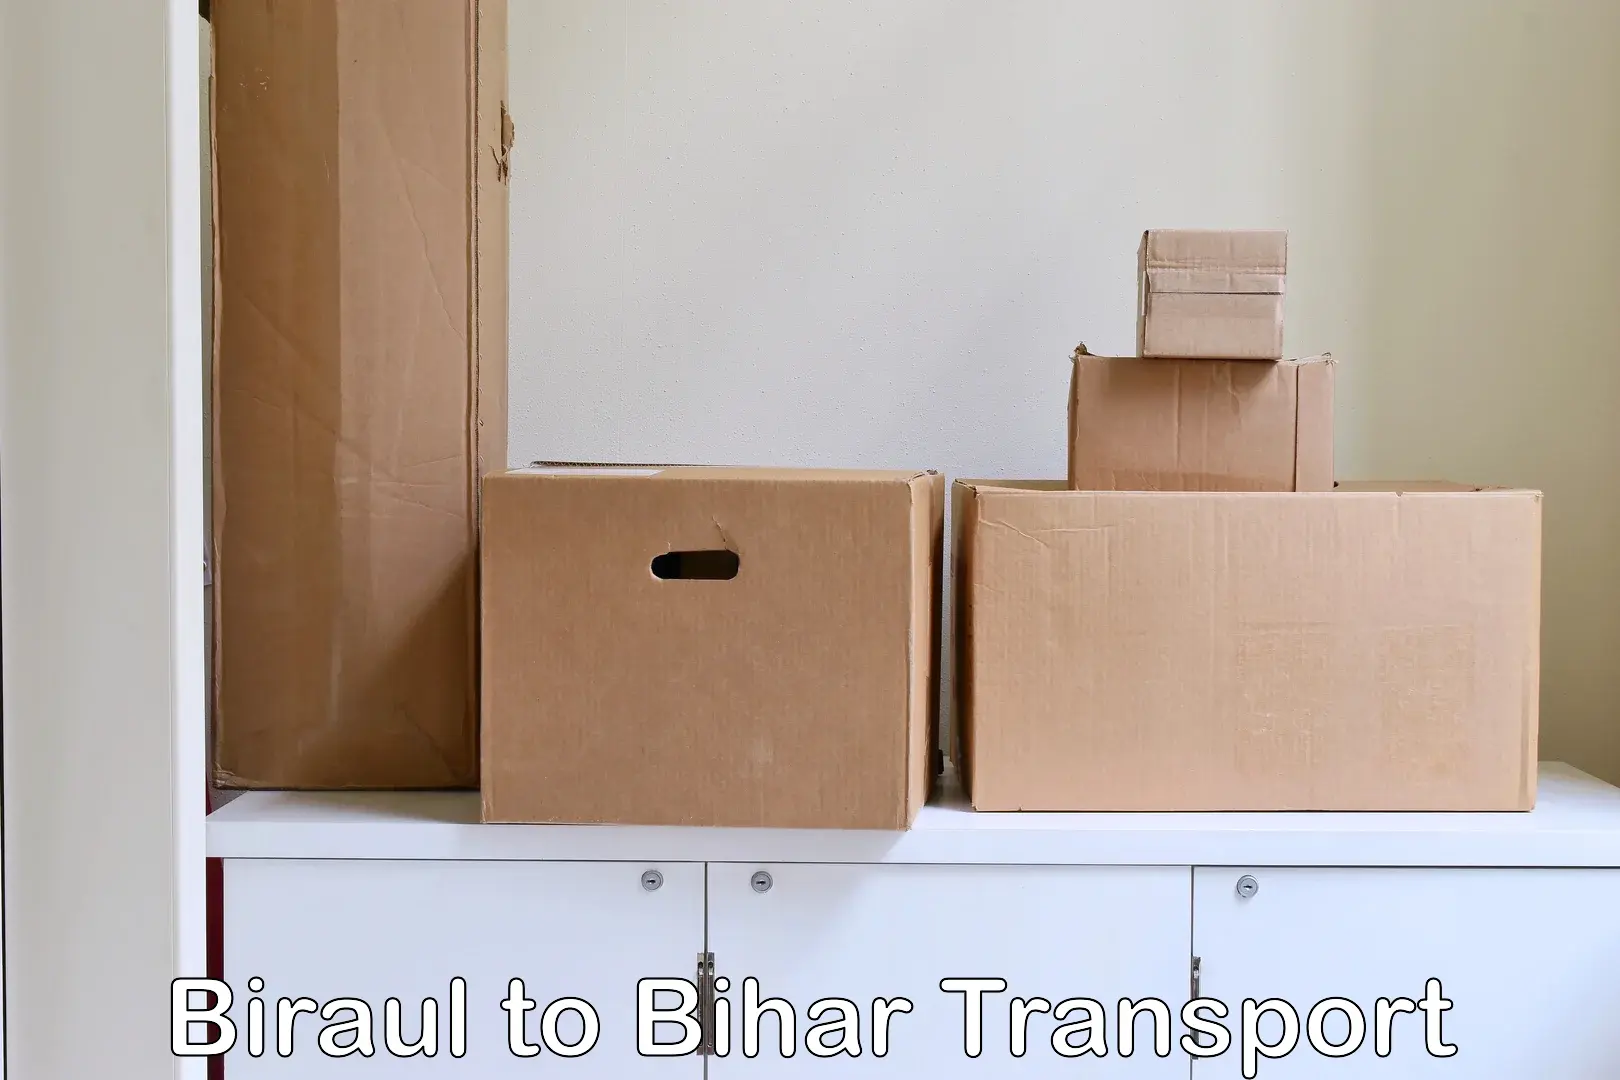 Daily transport service Biraul to Bihar